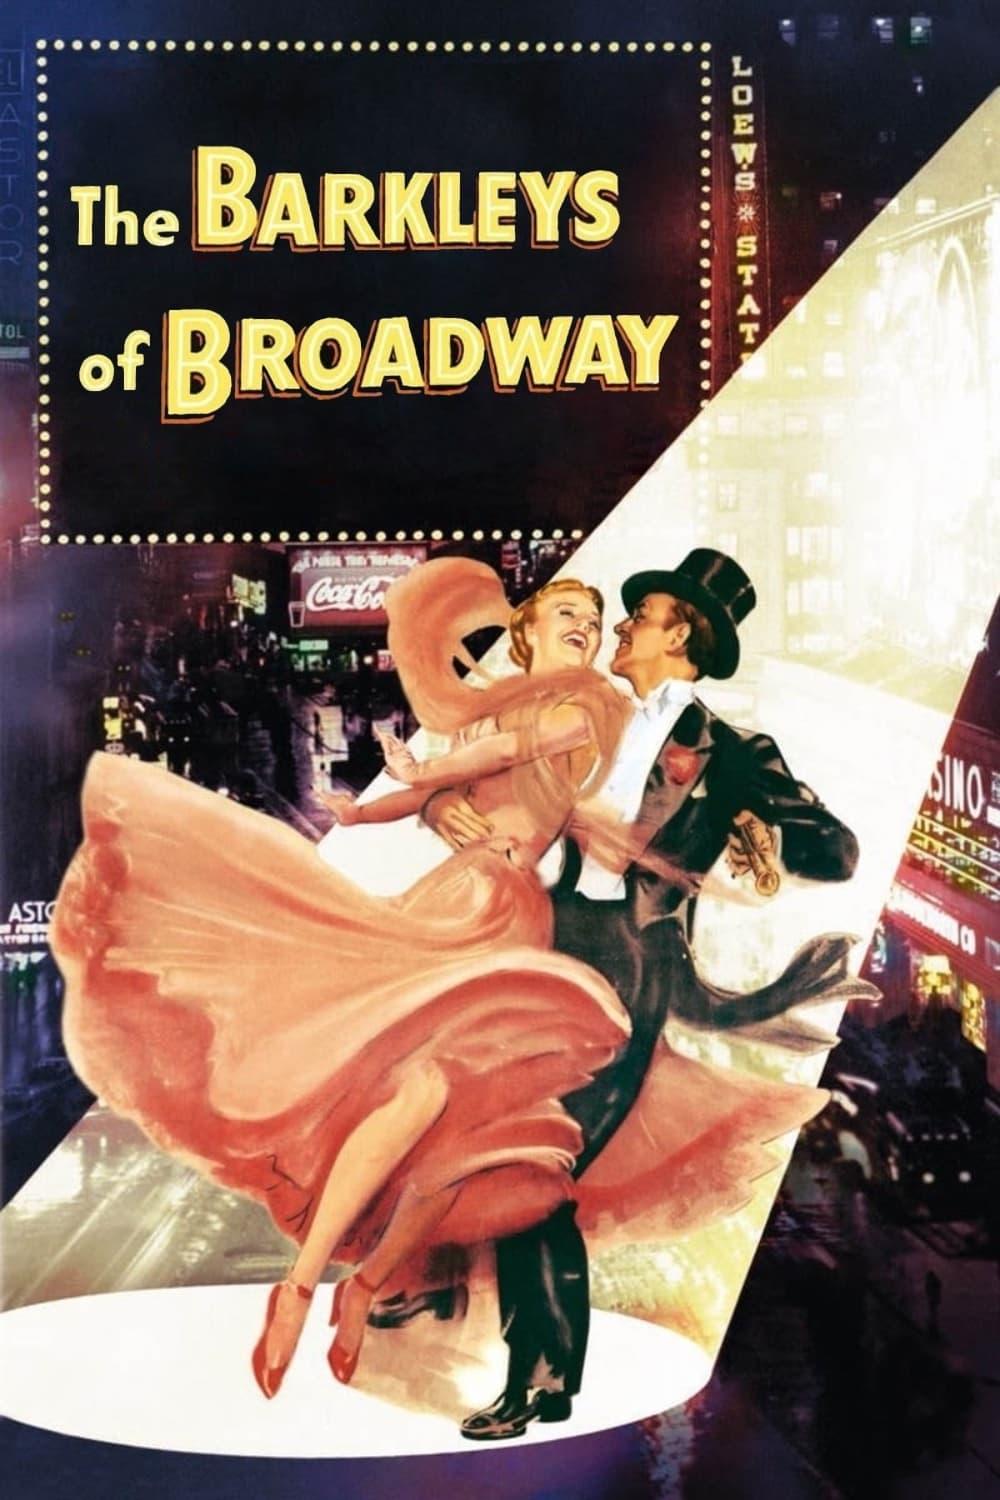 The Barkleys of Broadway poster